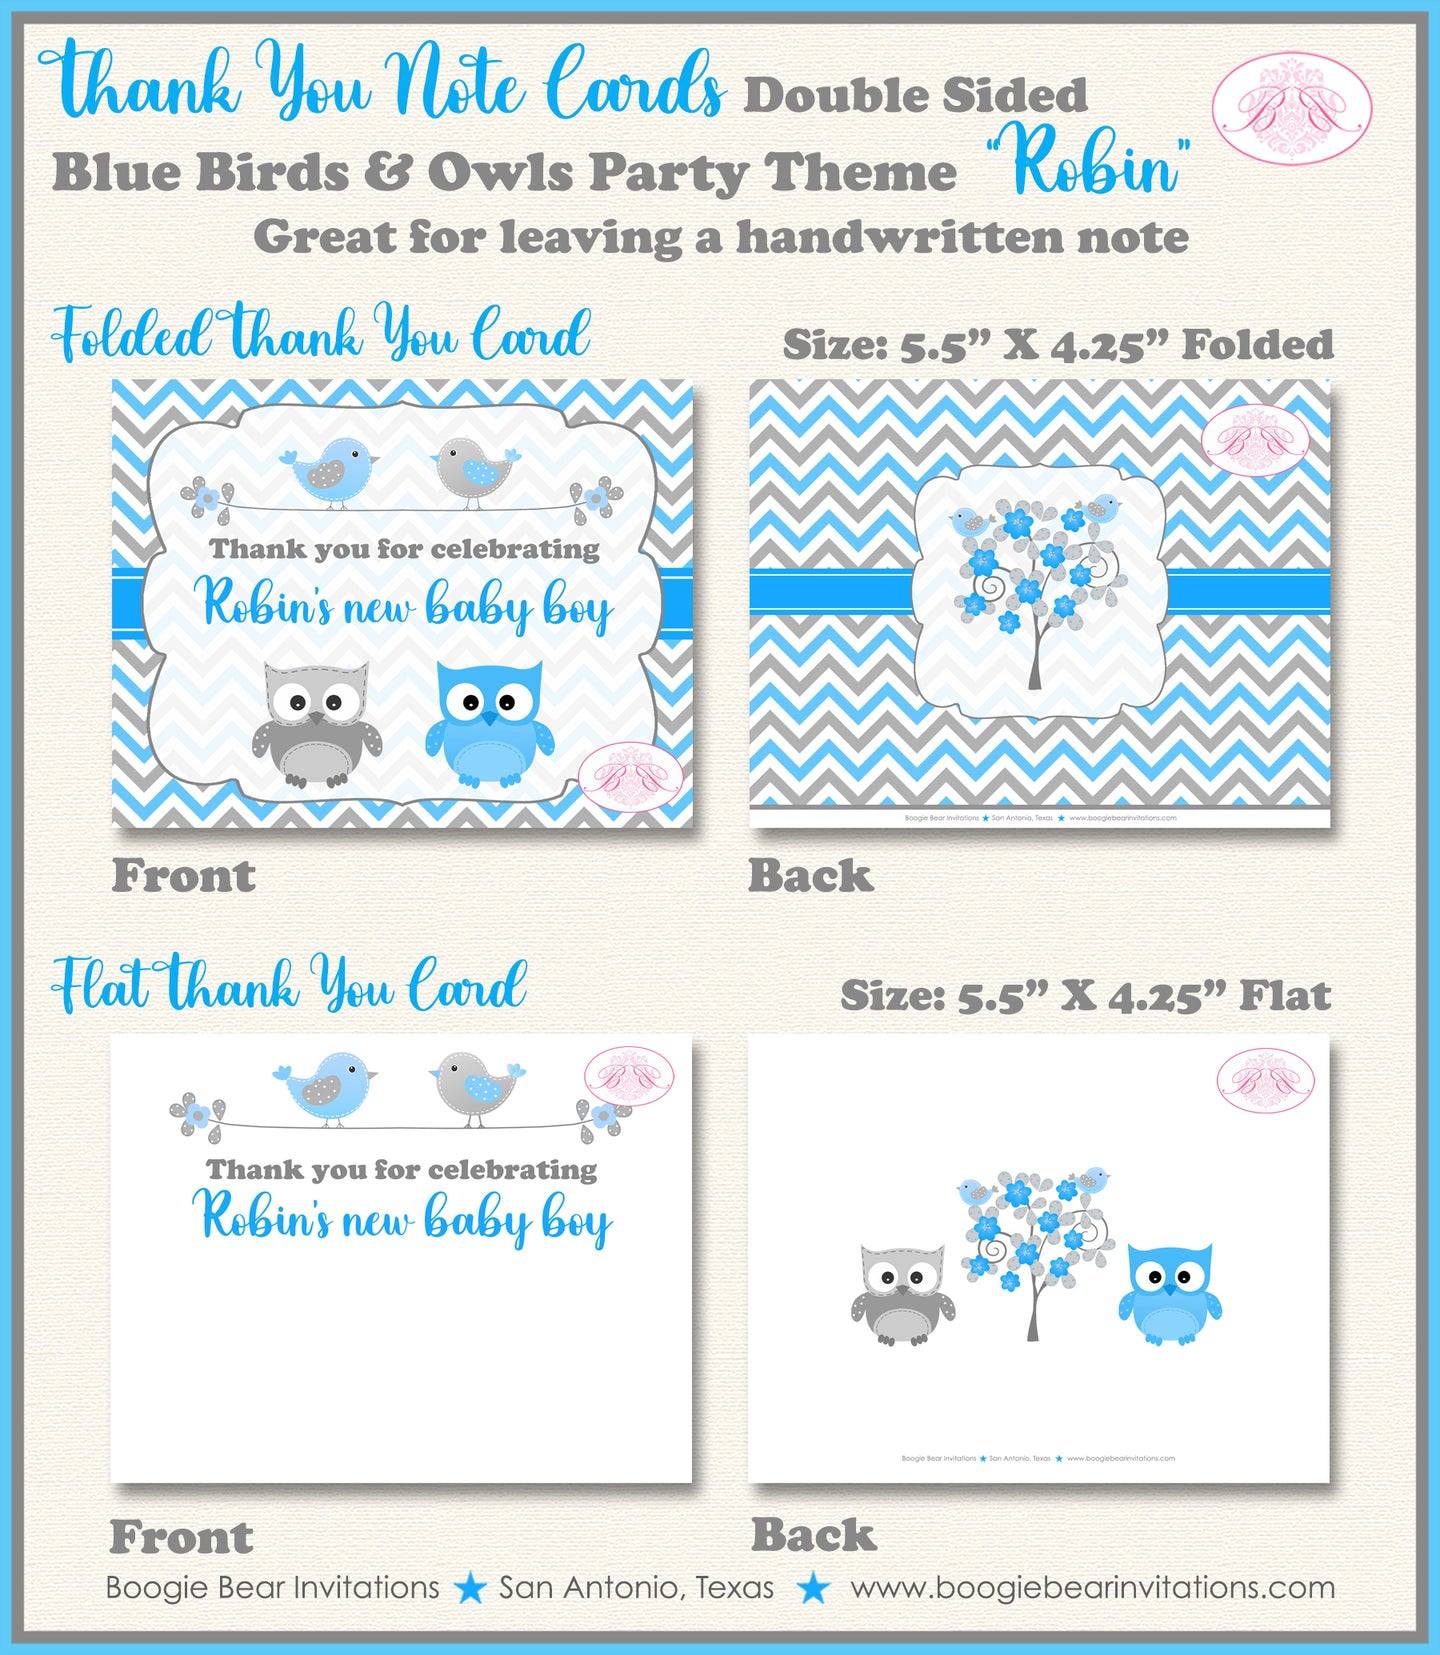 Woodland Birds Owls Boy Thank You Card Baby Shower Blue Boogie Bear Invitations Robin Theme Printed